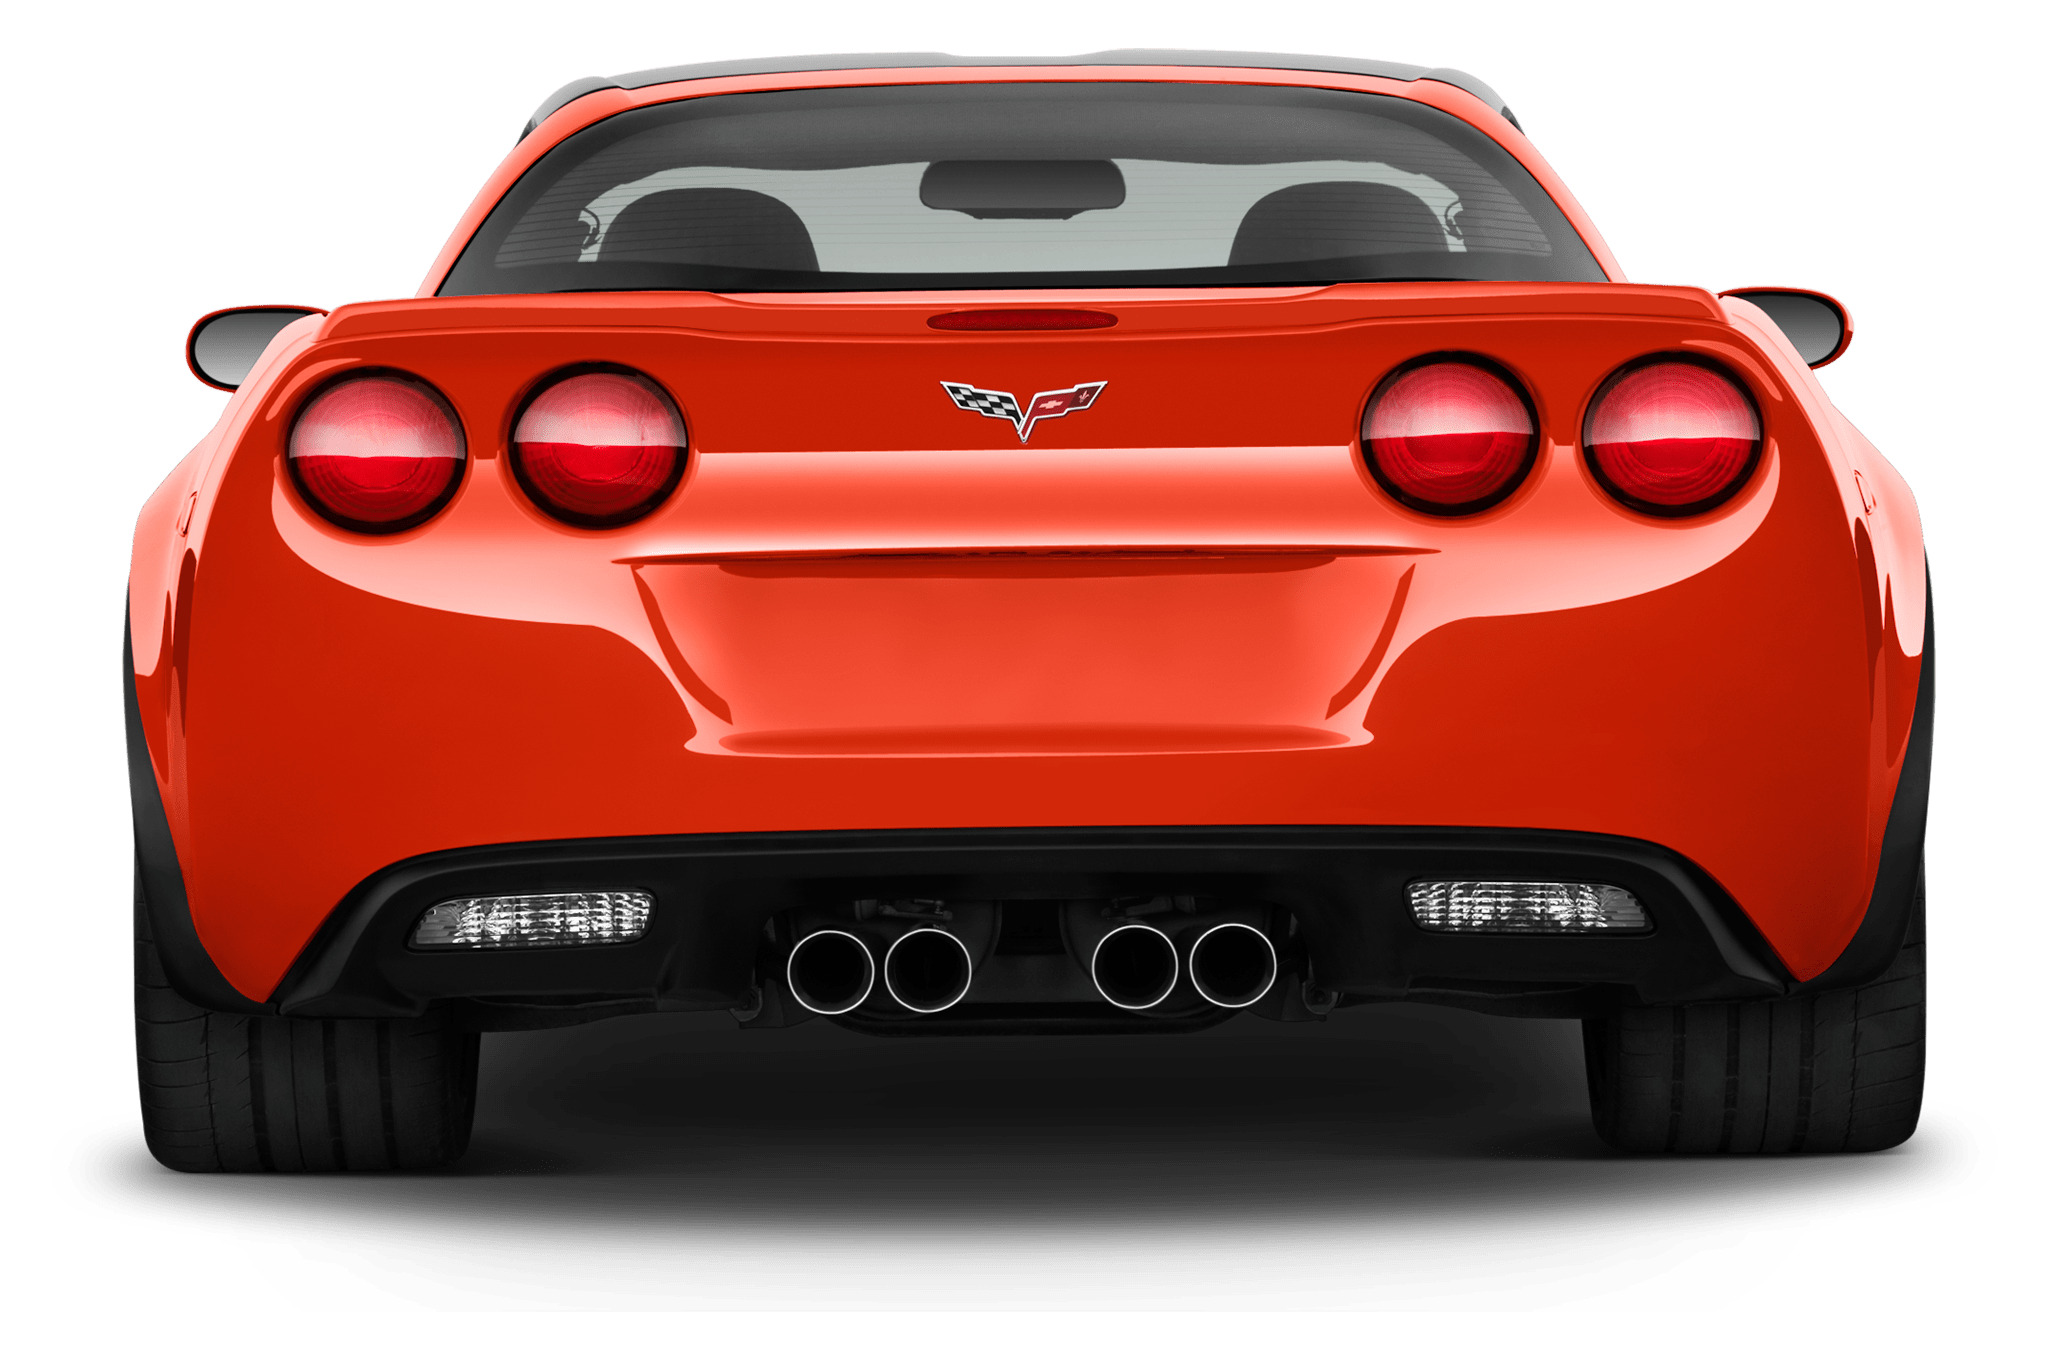 Corvette Rear View icons